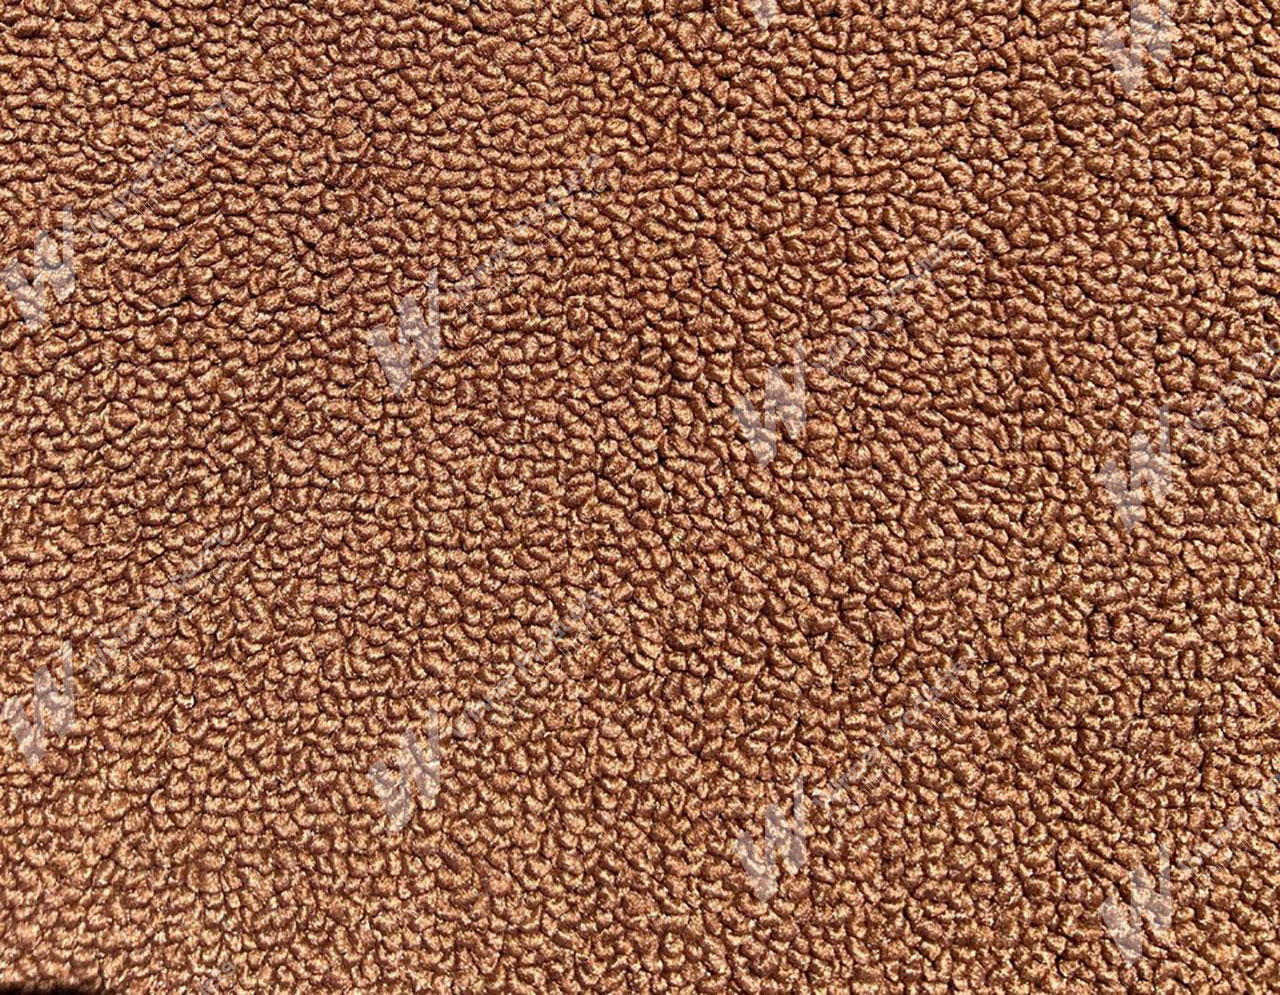 Ford Falcon 500 XB 500 Wagon P Parchment Carpet (Image 1 of 1)